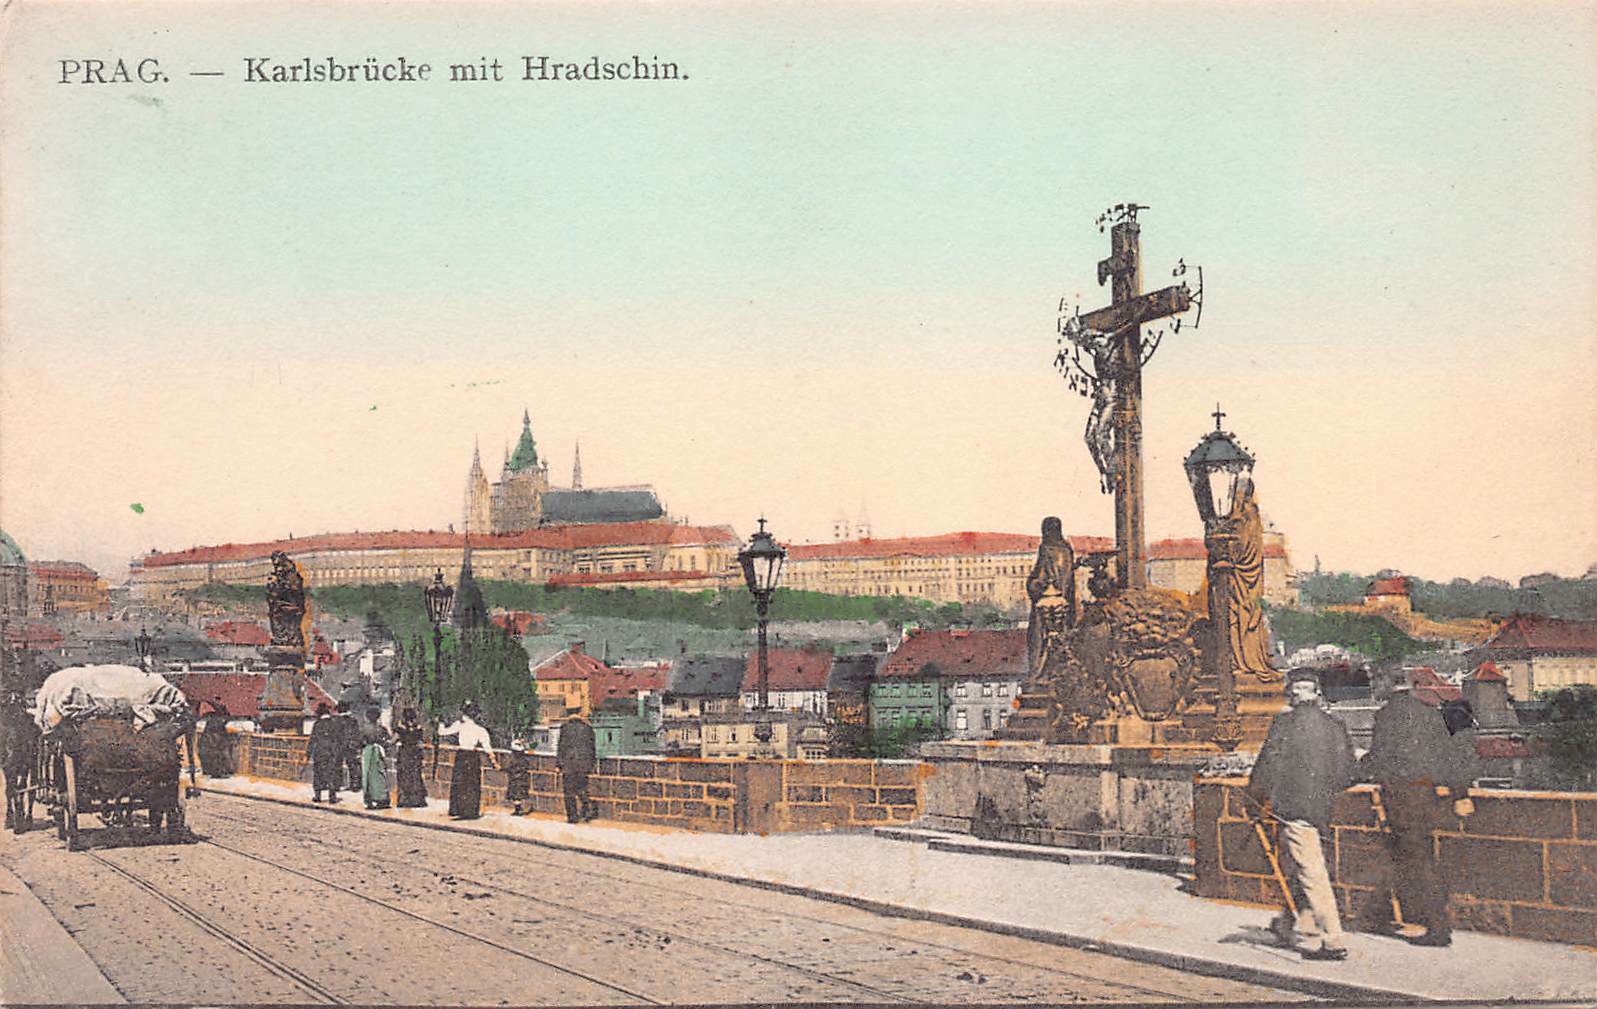 Karlsbrucke mit Hradschin, Prague, Czechoslovakia, Early Hand Colored Postcard